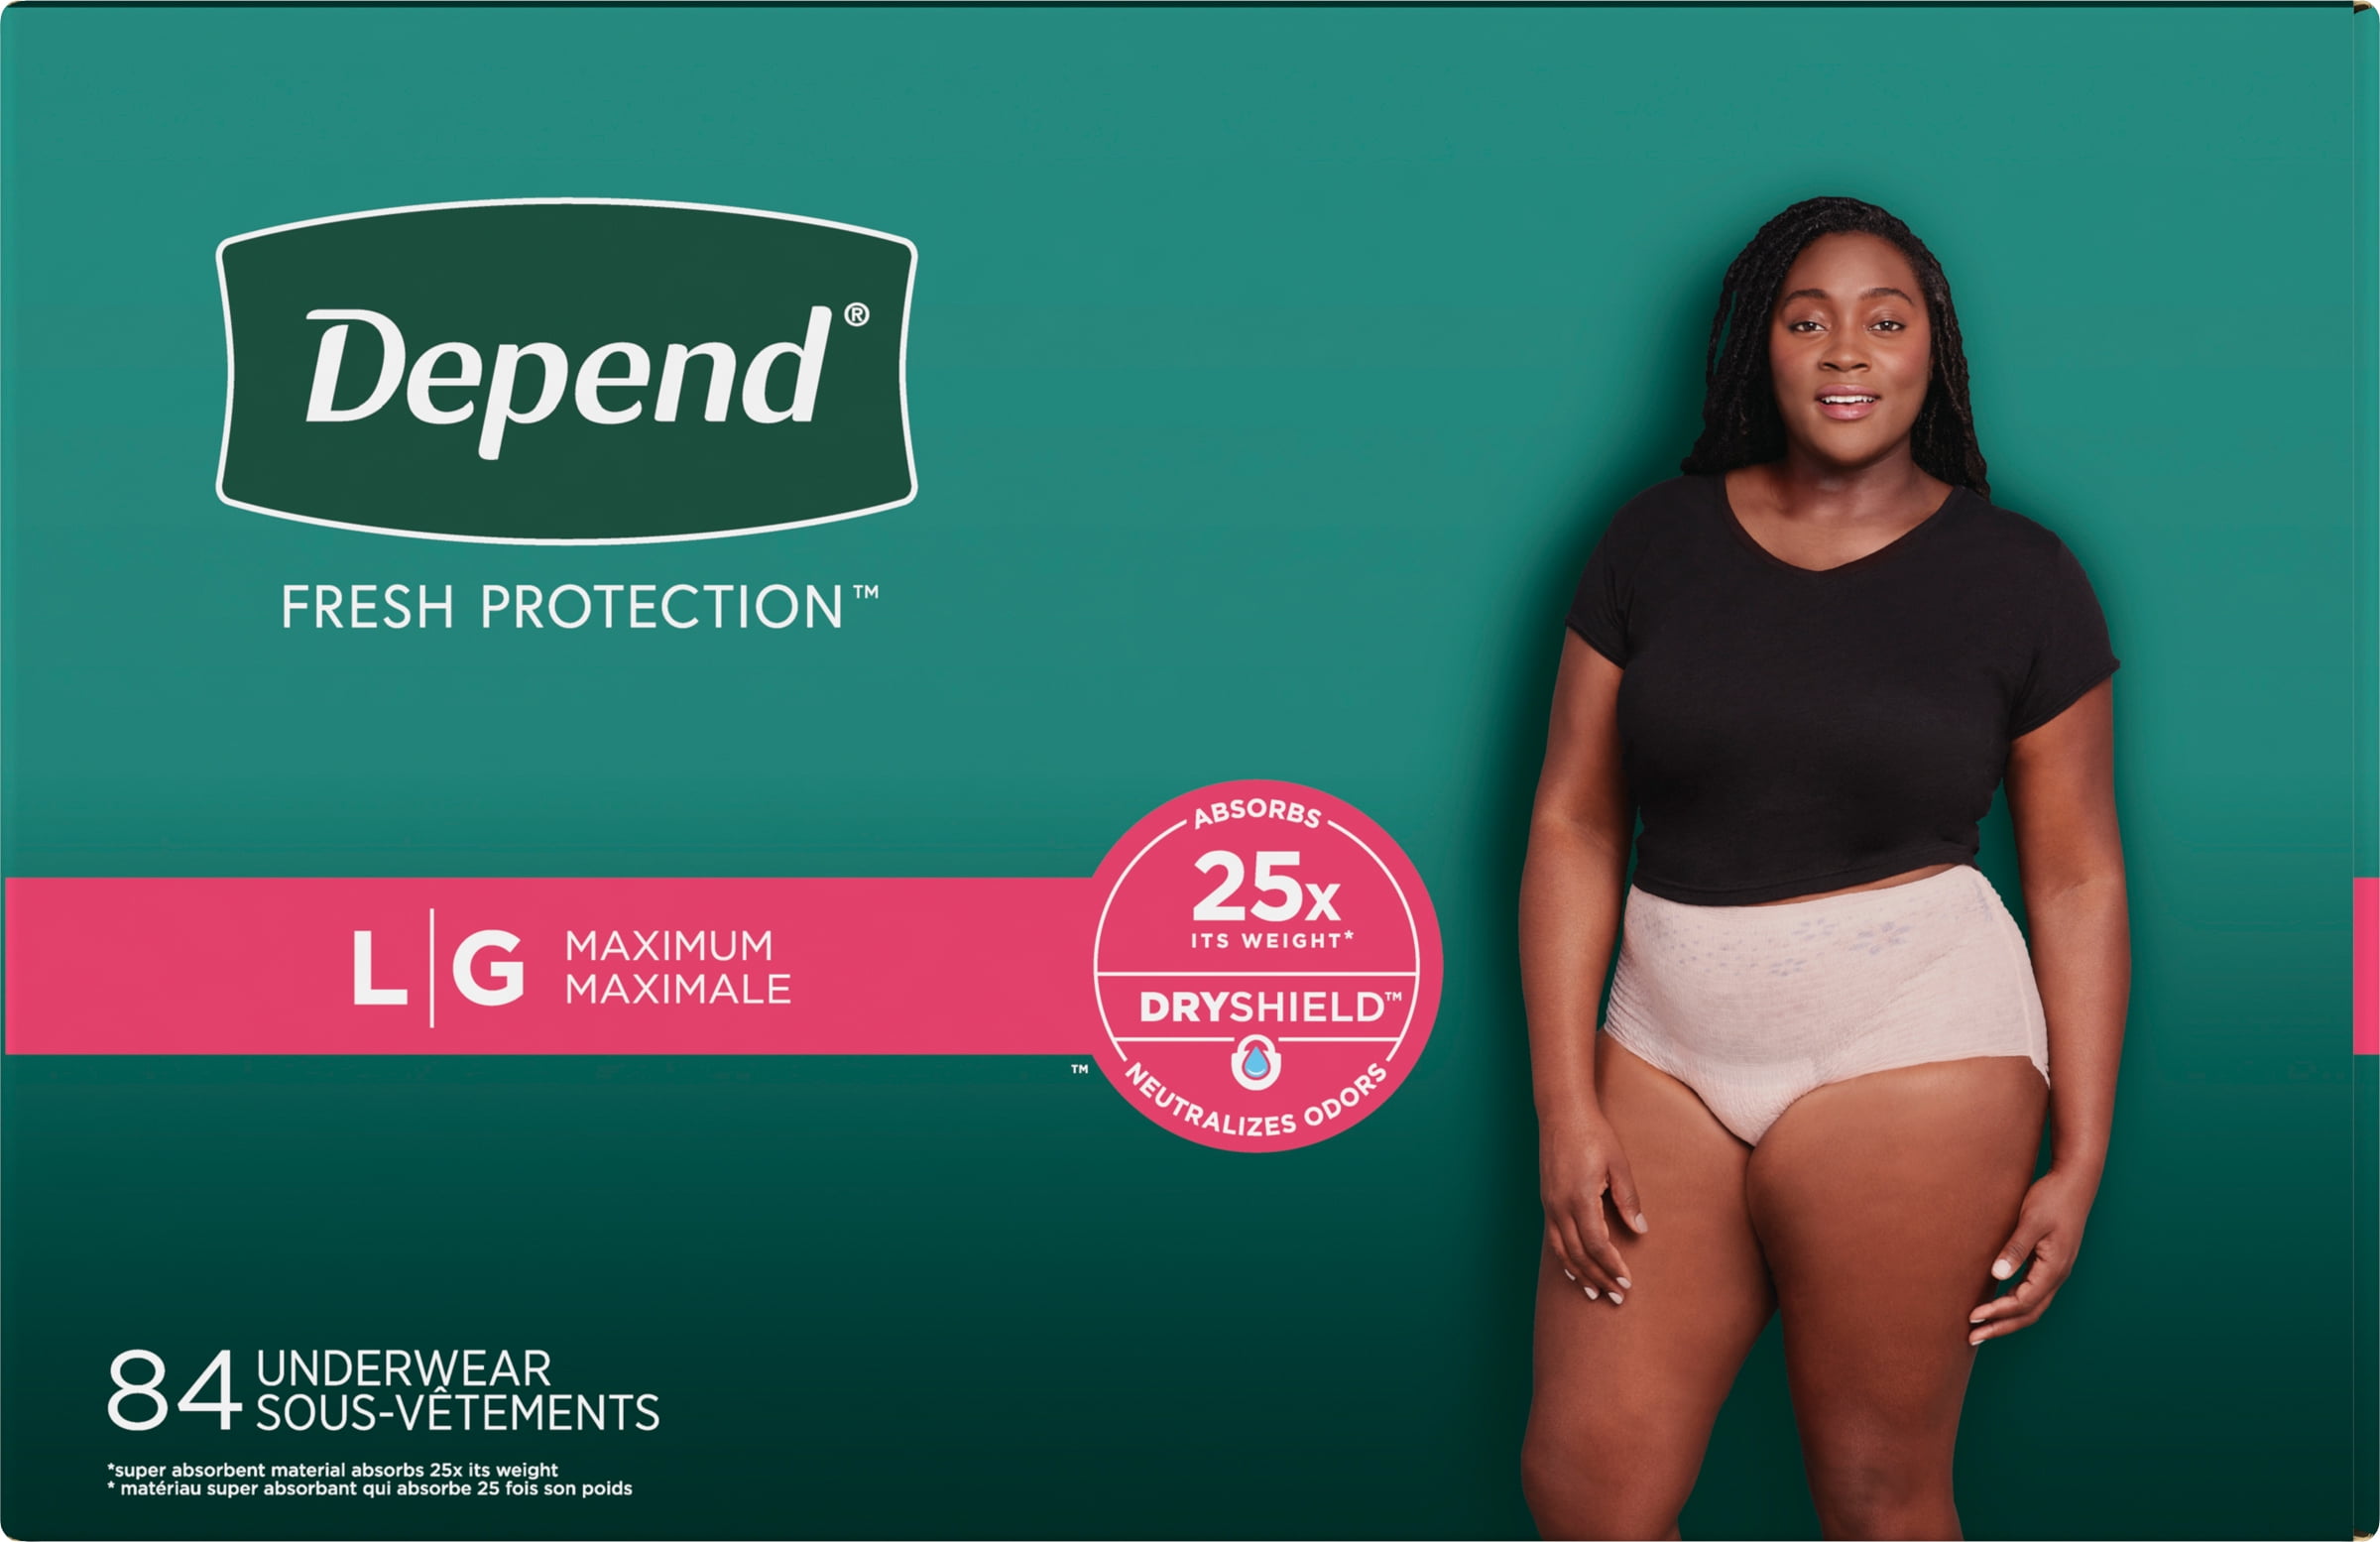 Depend Underwear for Women, Fit-Flex, Maximum Absorbency, Large 84 ct.